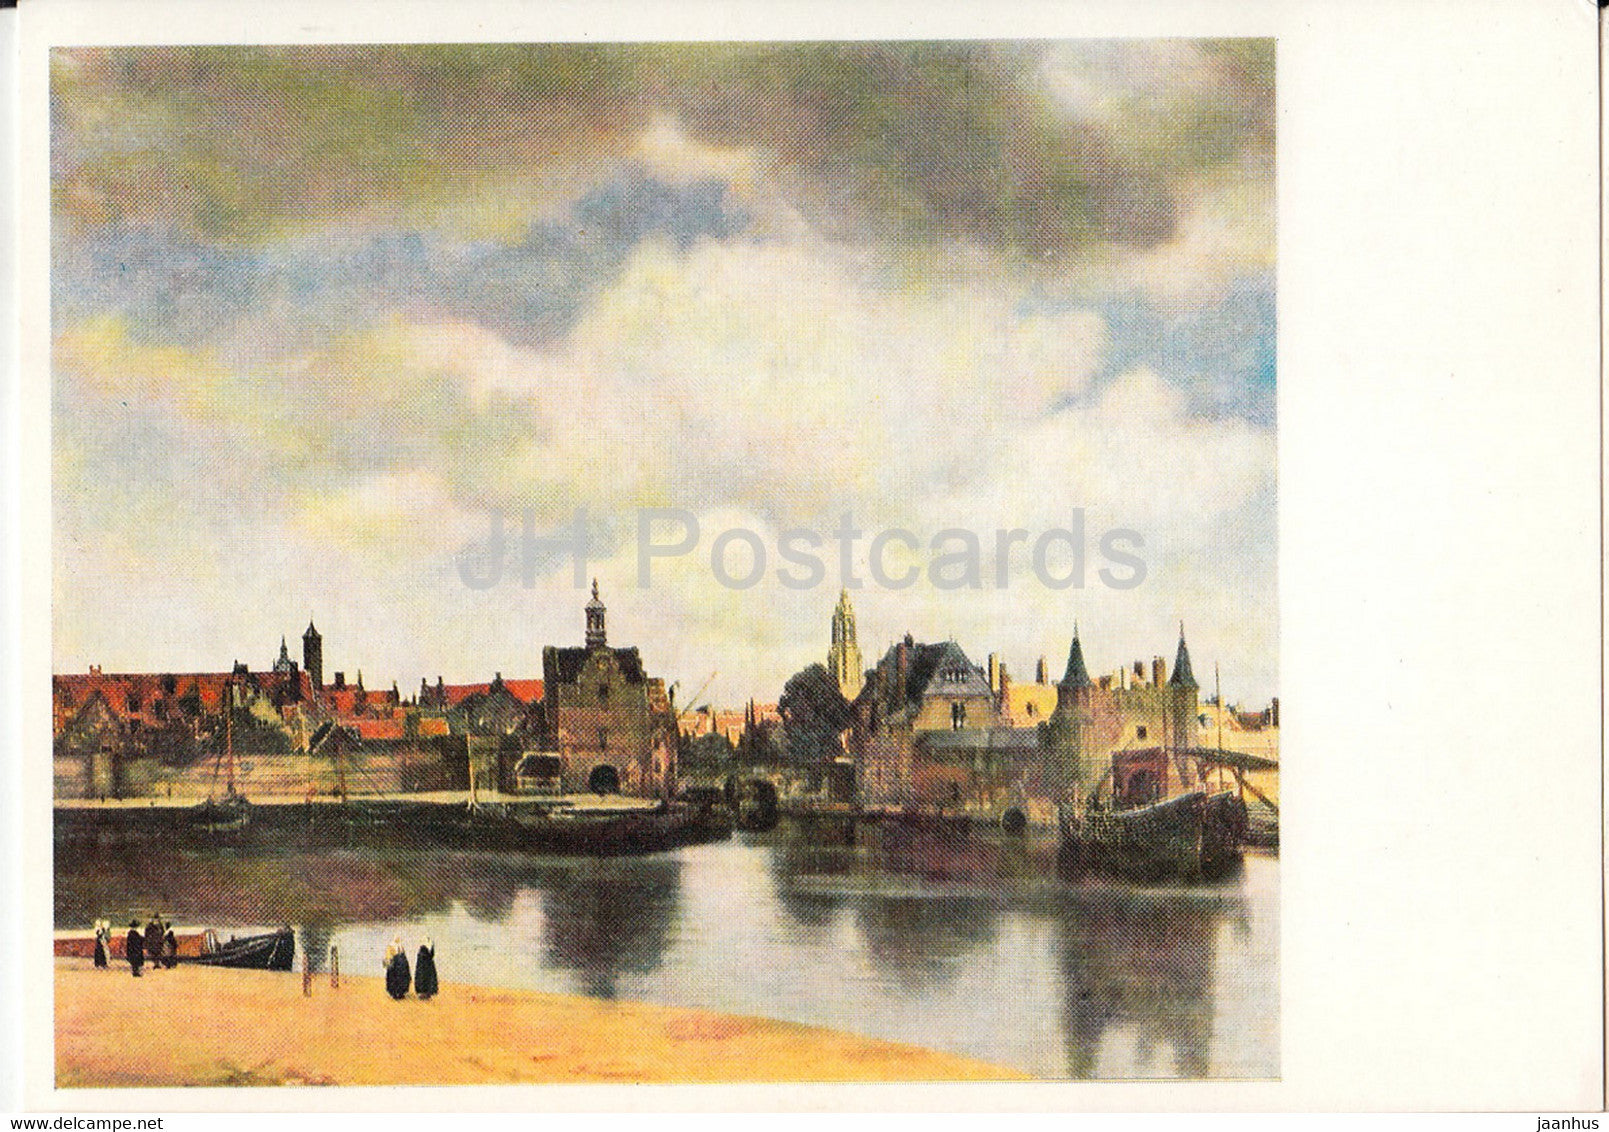 painting by Vermeer van Delft - Ansicht der Stadt Delft - Dutch art - Germany DDR - unused - JH Postcards